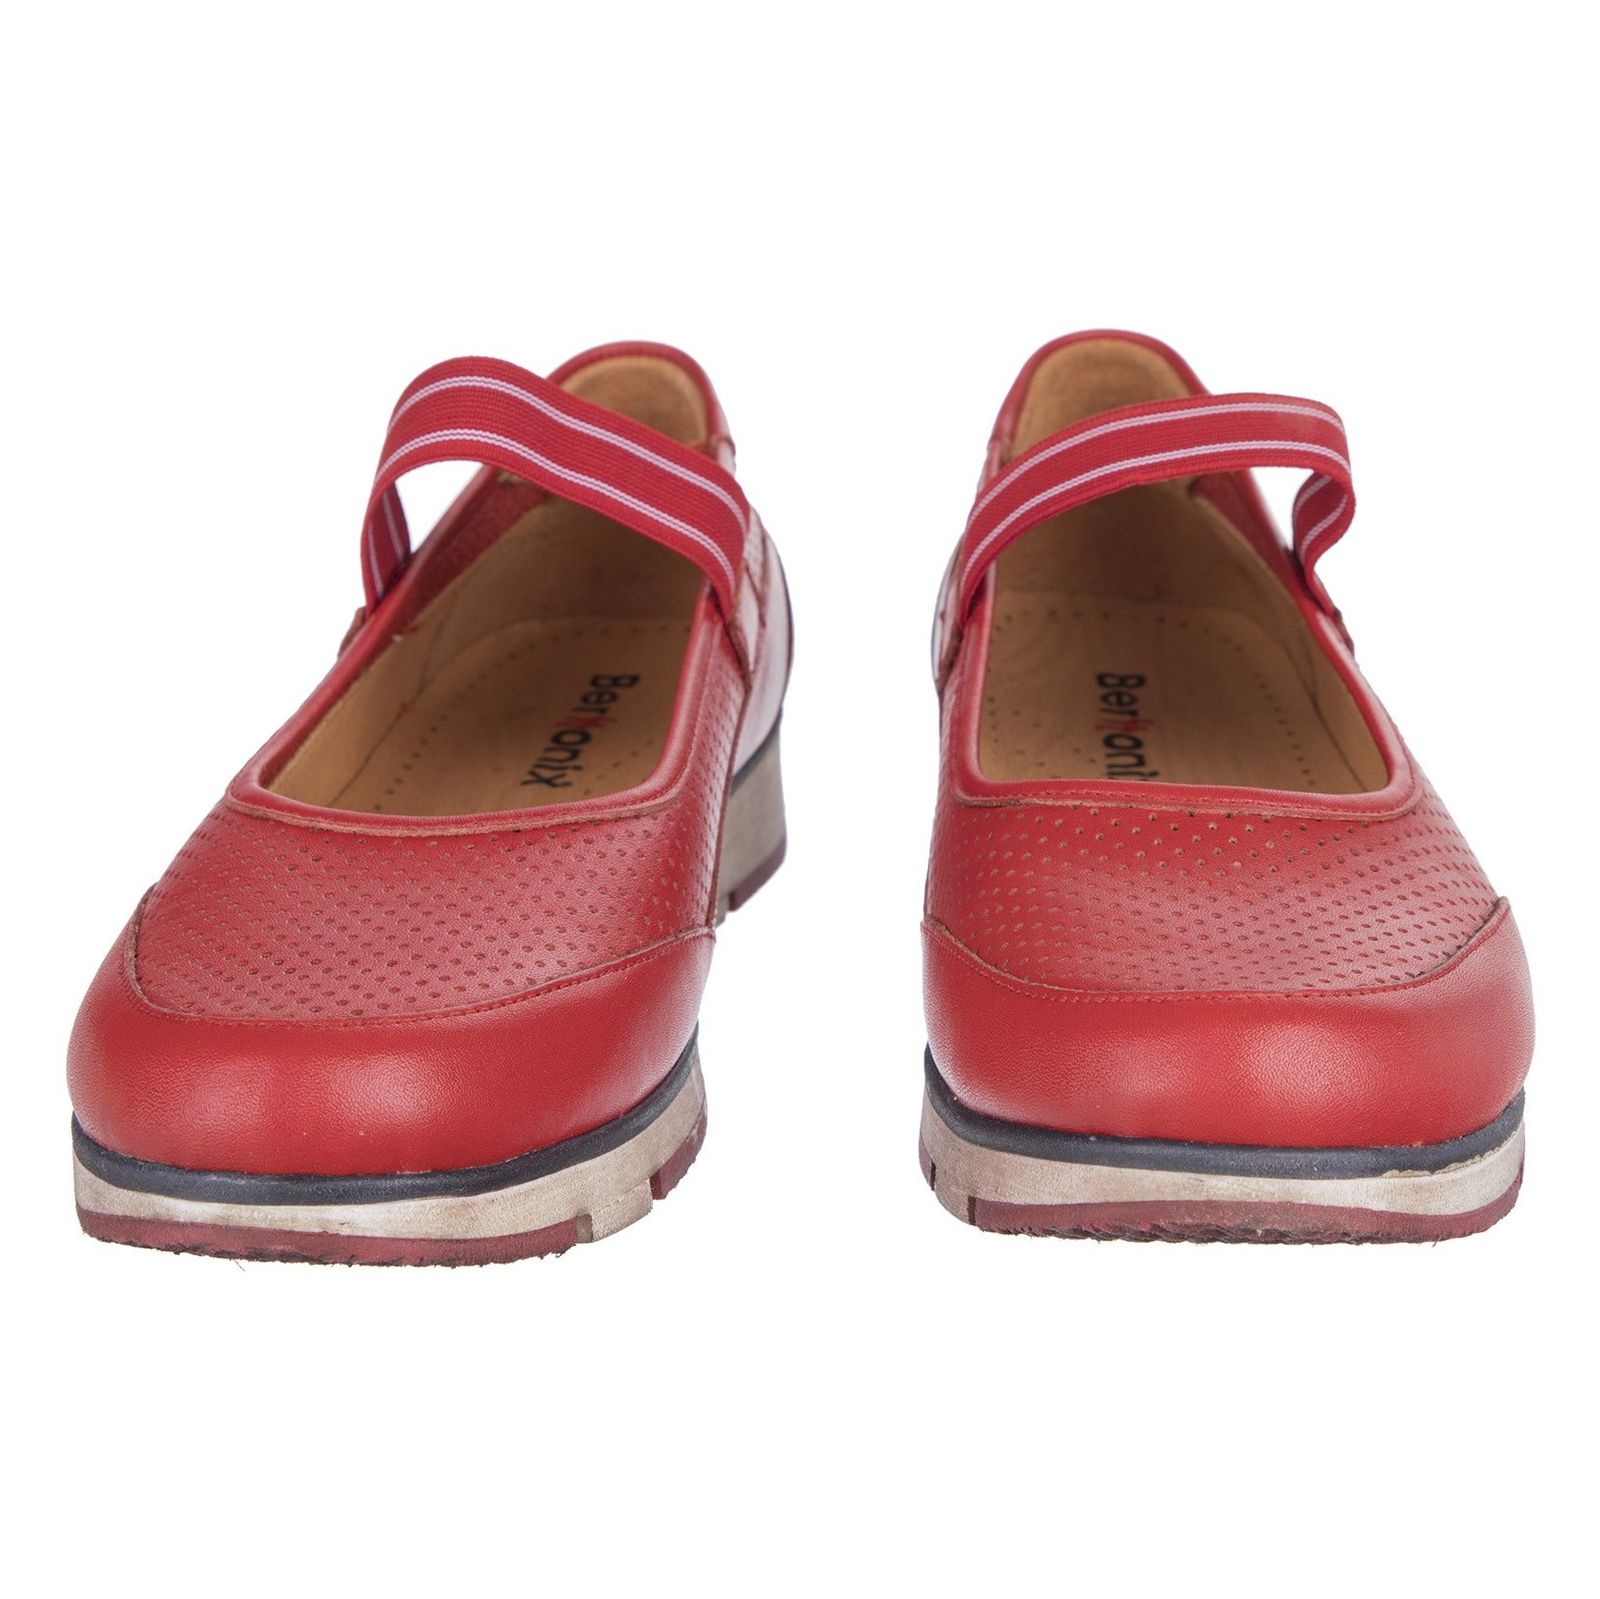 کفش تخت چرم زنانه - برتونیکس - قرمز - 5